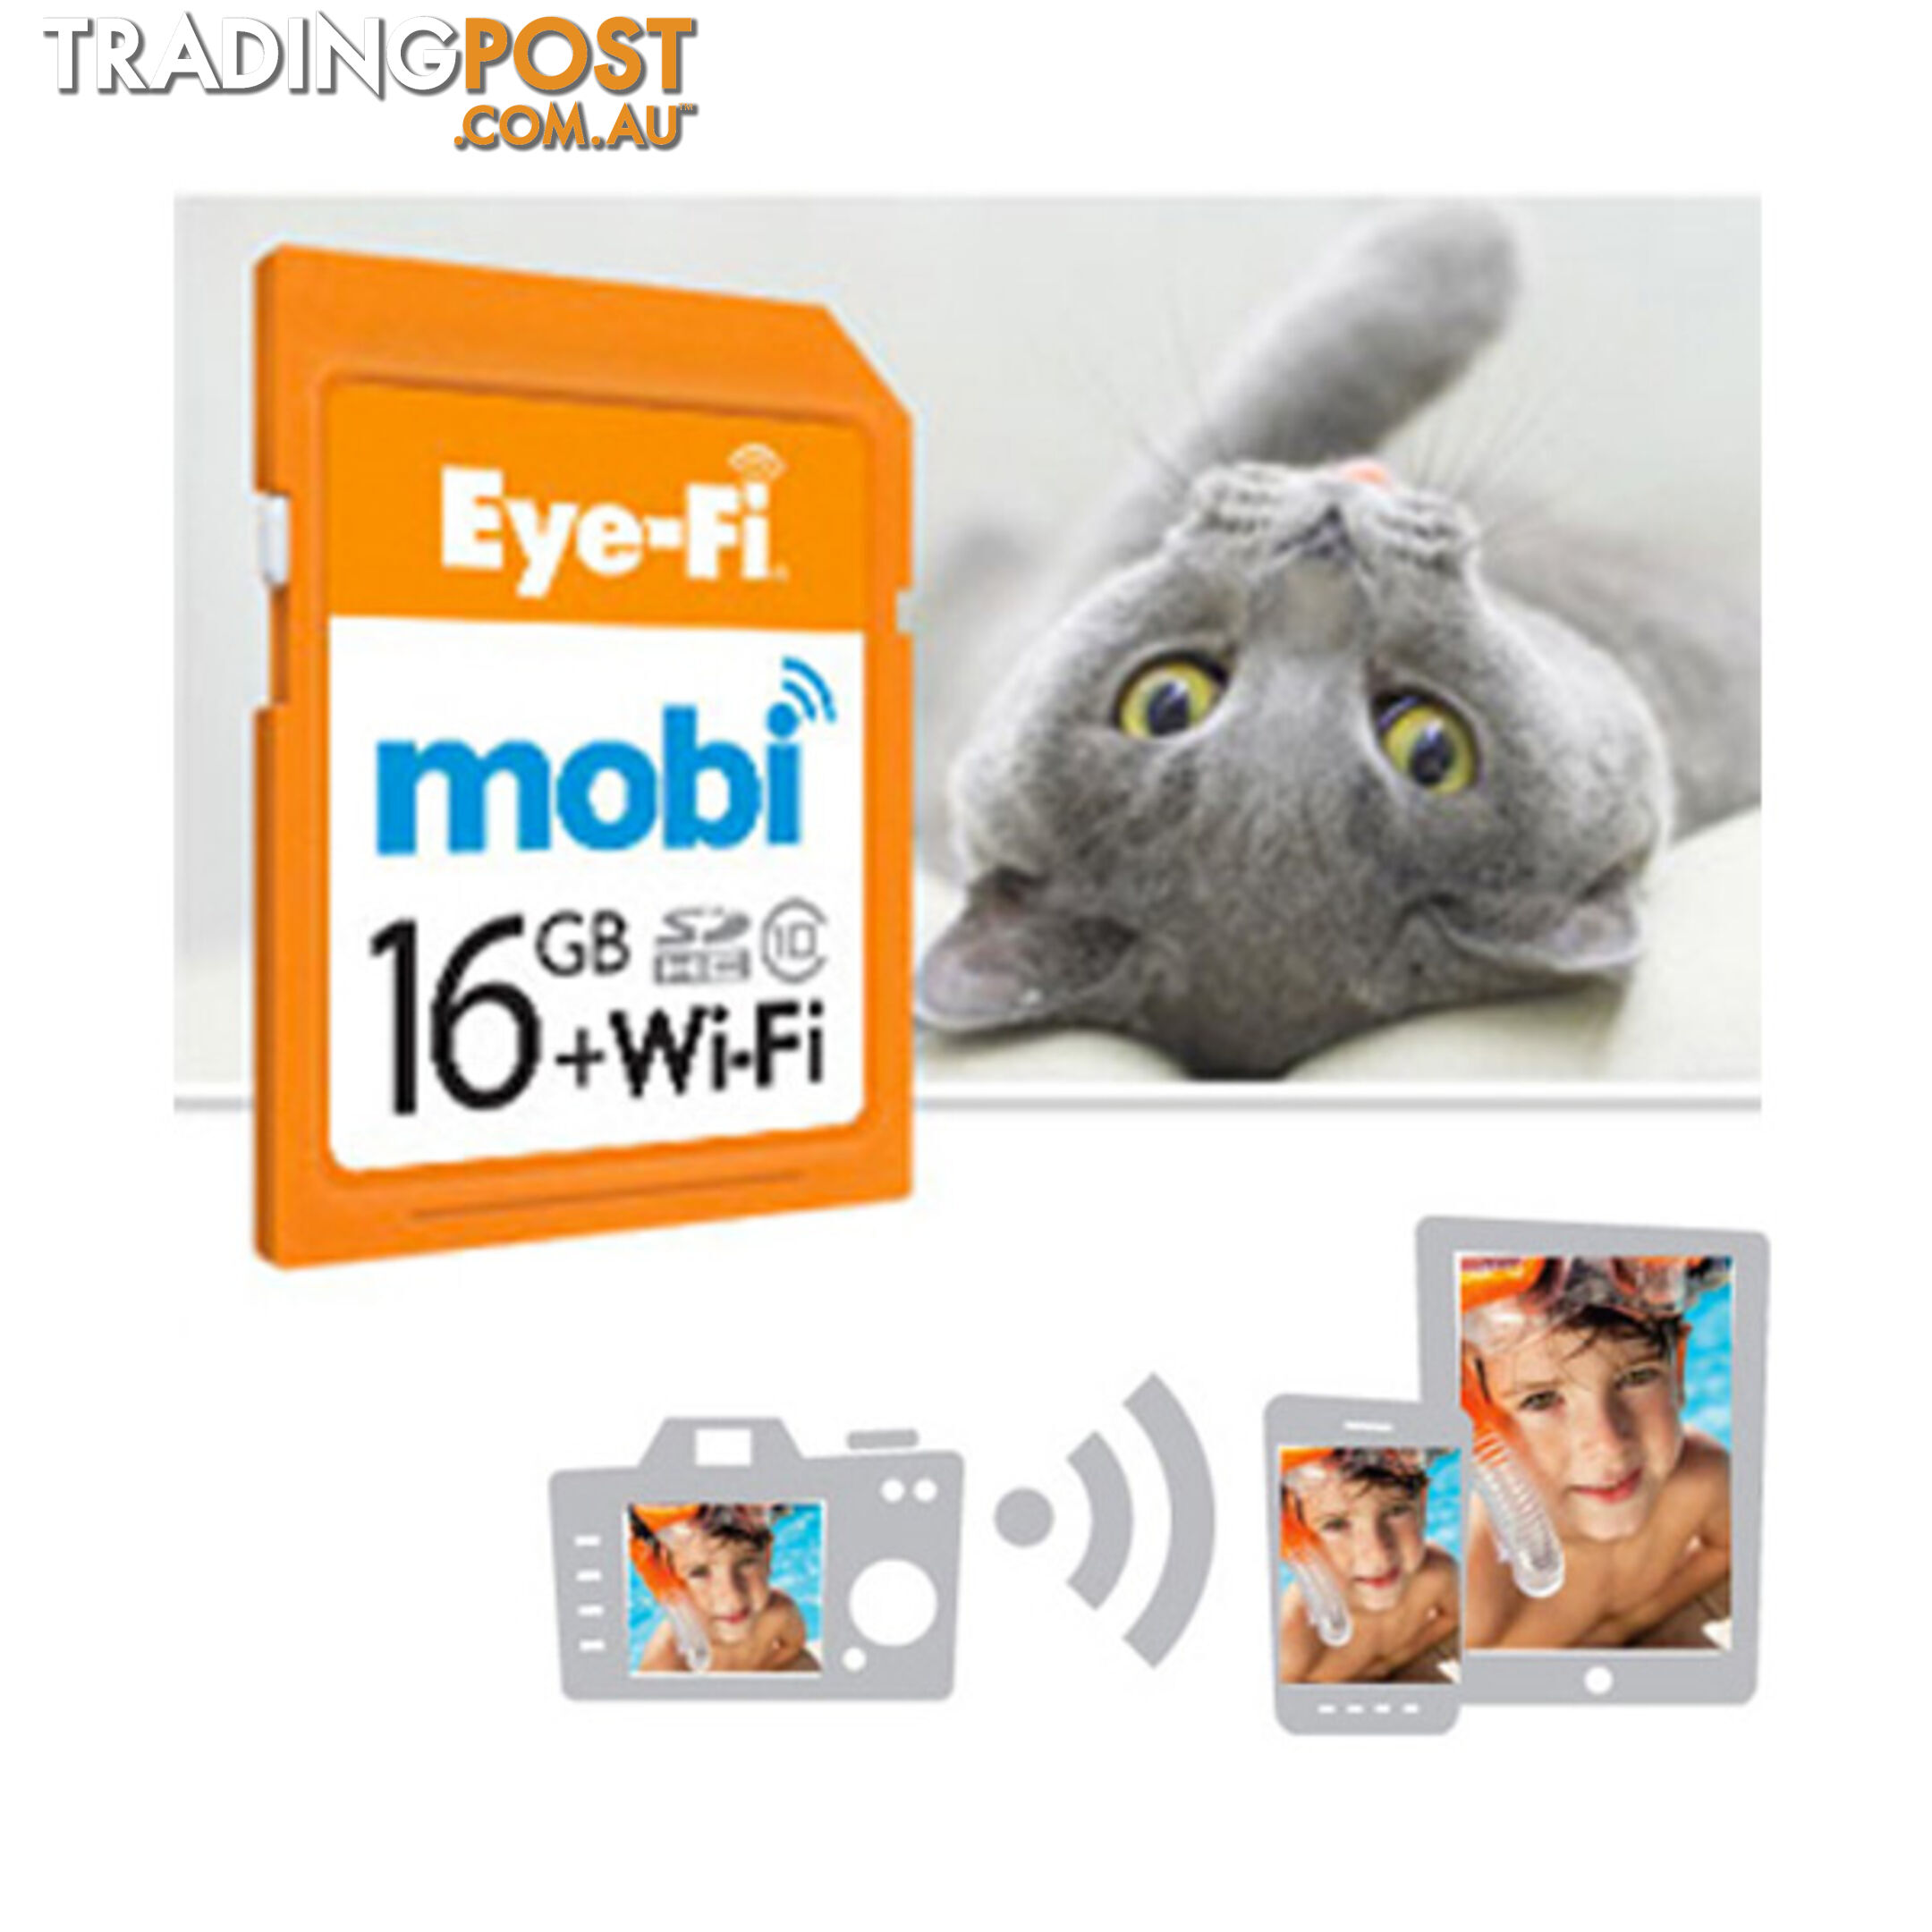 Eye-Fi Mobi 16GB WIFI SDHC Memory Card - Wireless Photo & Video Uploads